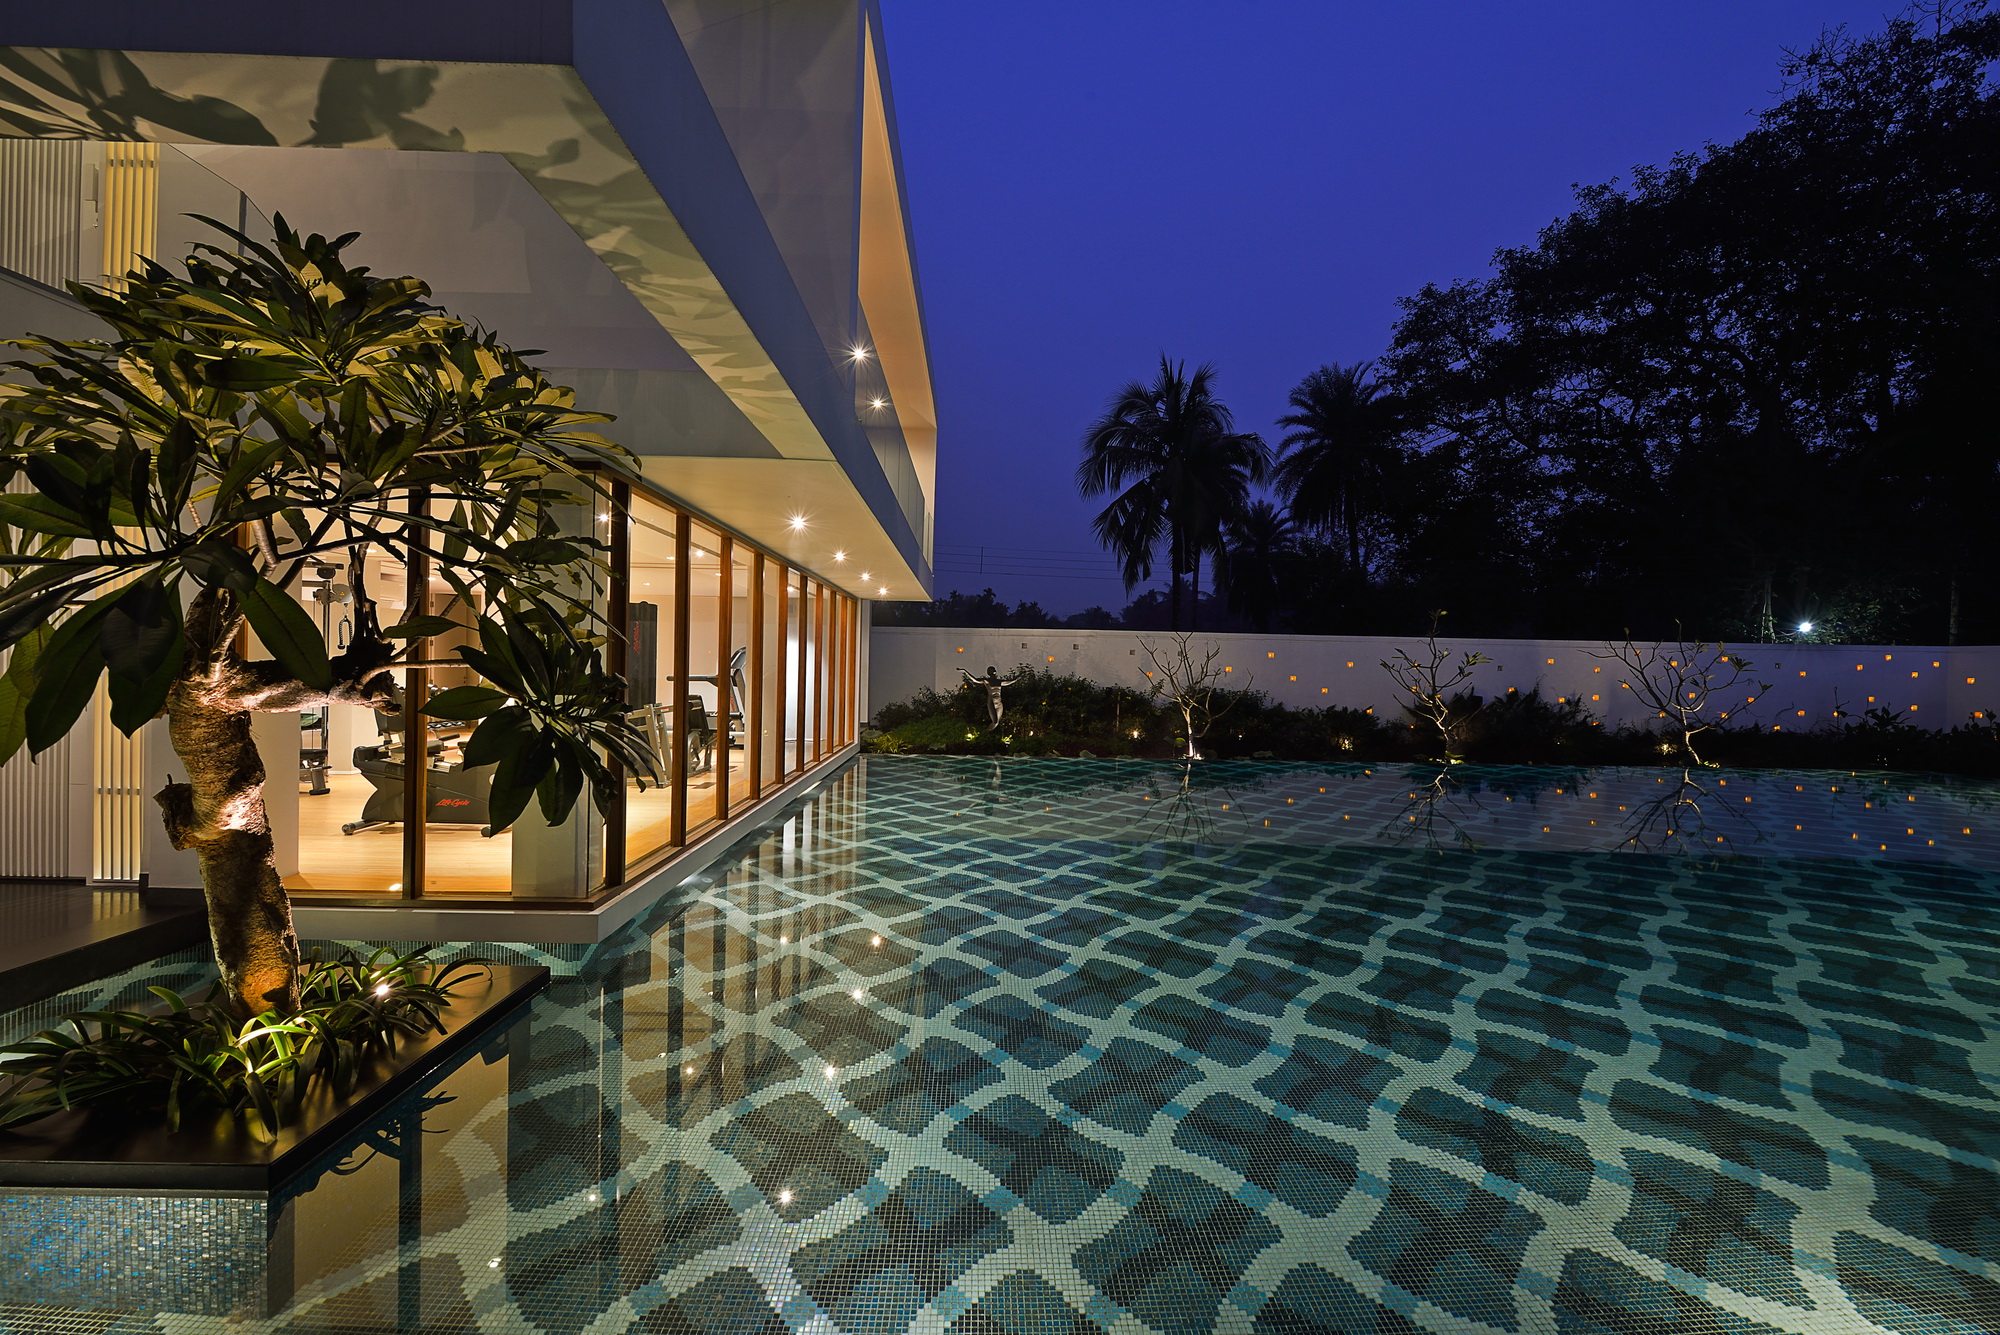 Pool House by Abin Design Studio